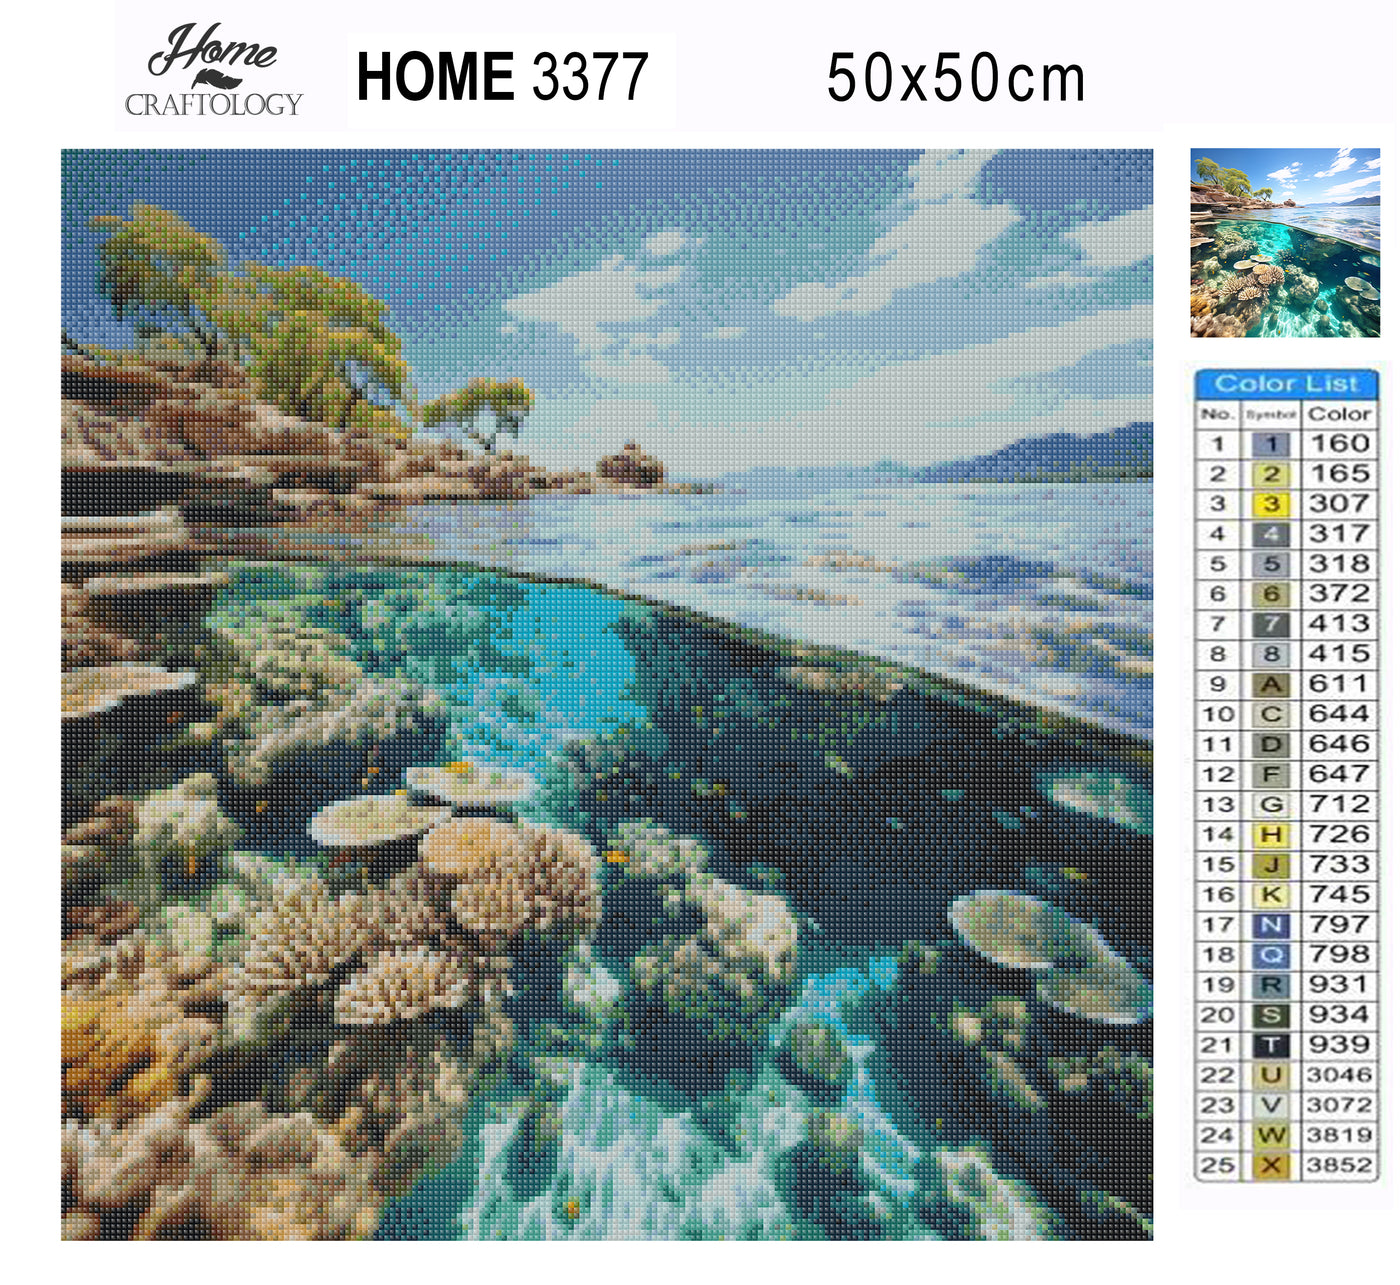 New! Great Barrier Reef Underwater - Premium Diamond Painting Kit